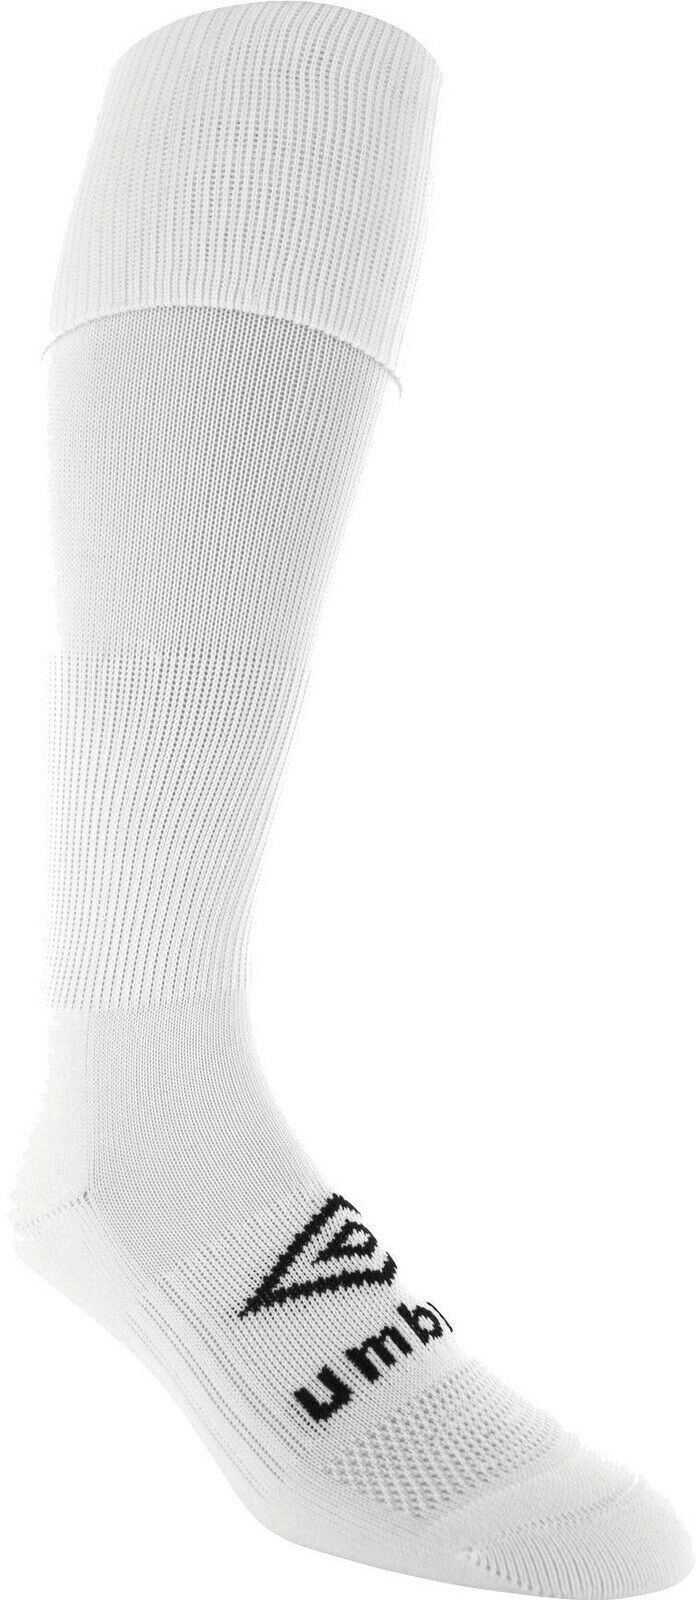 New Umbro White Soccer Socks 2-pack Youth Size Xs Youth Shoe Size 9k - 1